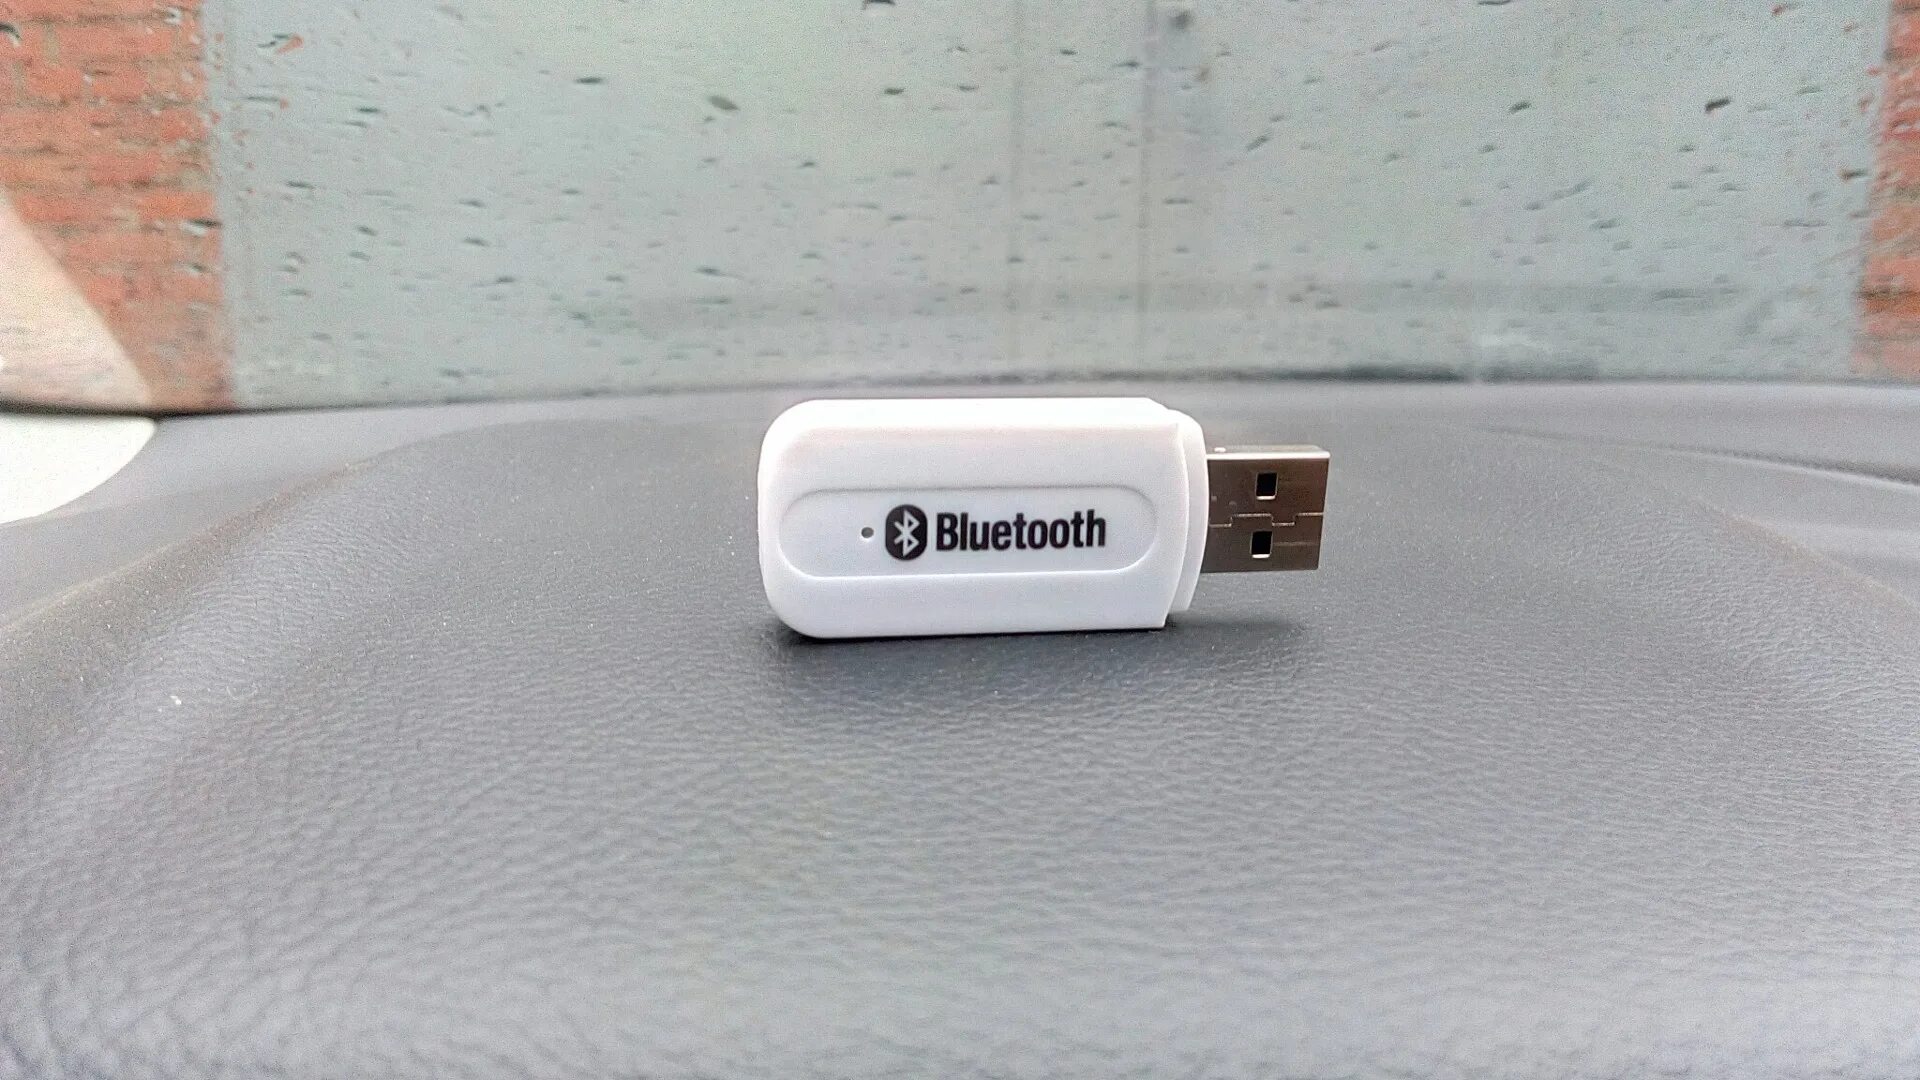 Bluetooth Ford Focus 2. USB Bluetooth адаптер Ford Focus 3. Ford Focus 2008 Bluetooth USB Inverter. Блютуз адаптер для Форд фокус 3 USB.